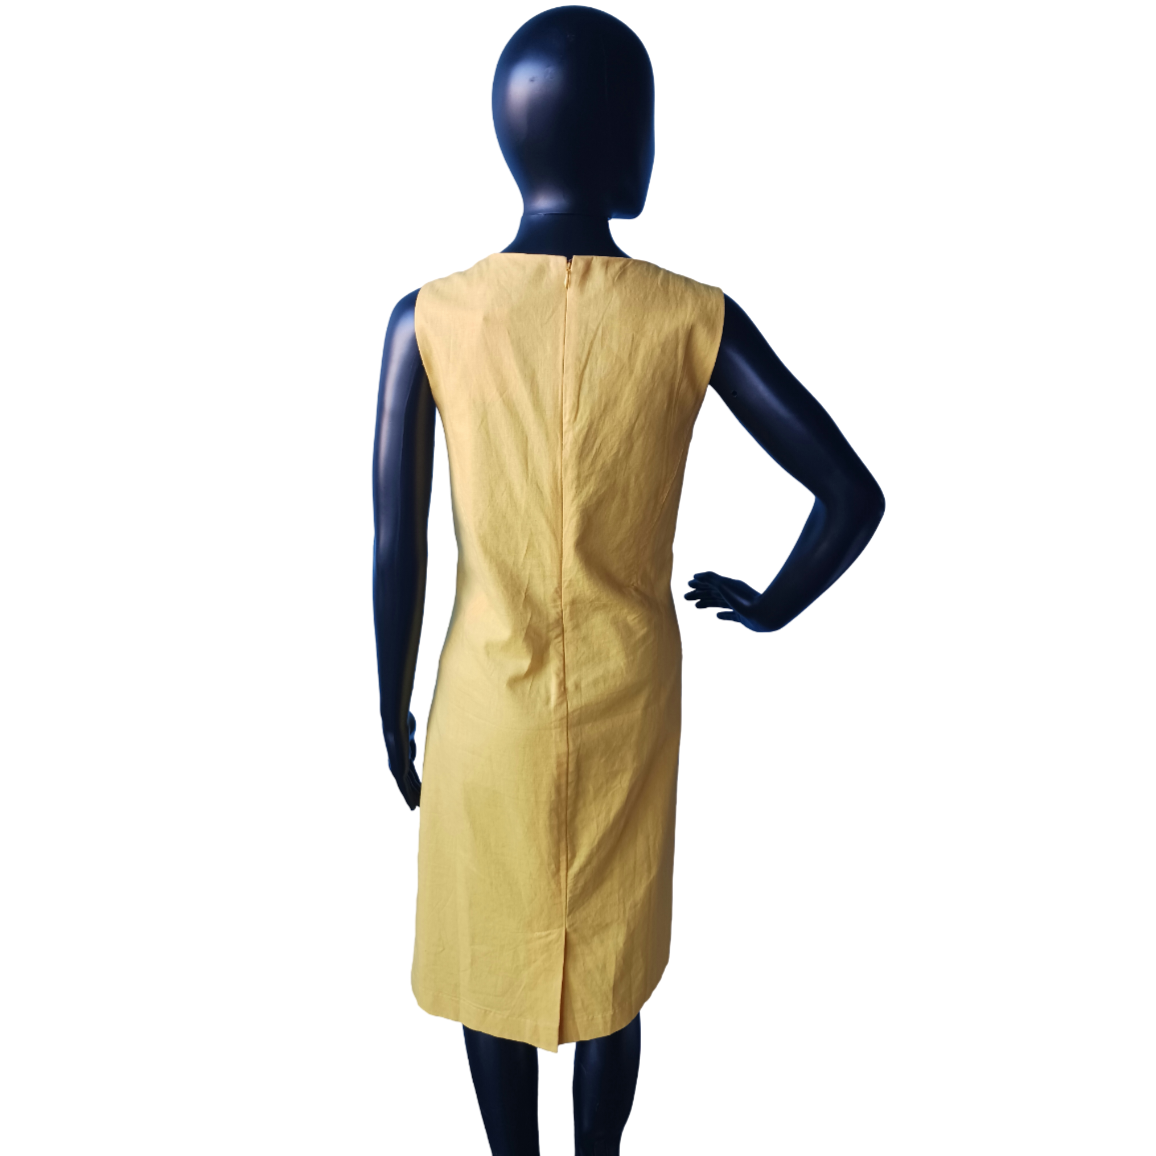 JG Hook Marigold Yellow Dress, Size 14